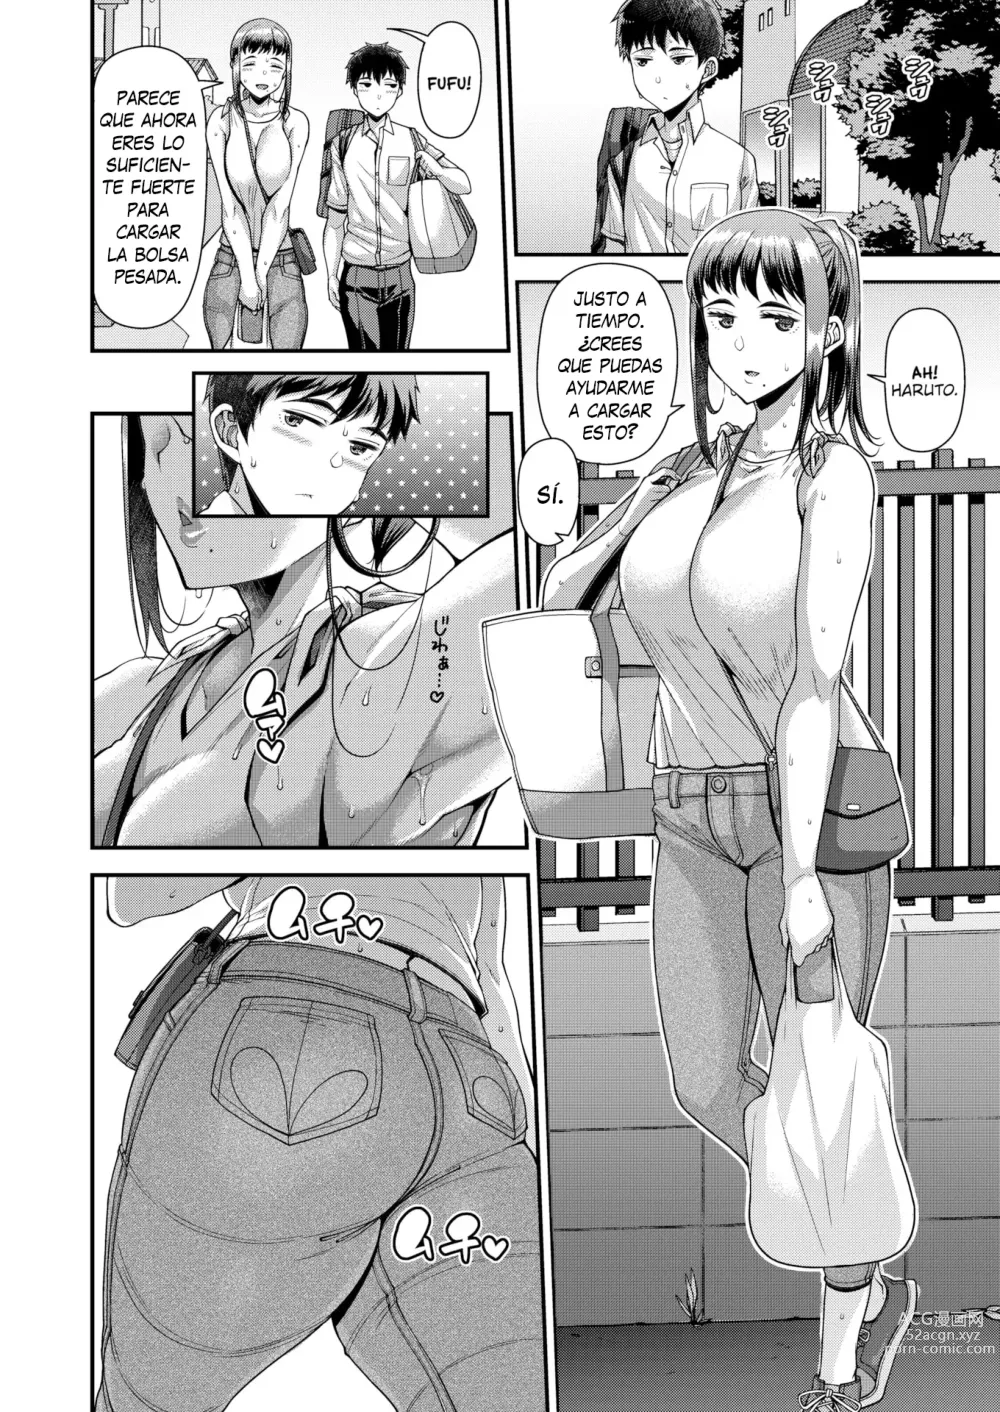 Page 42 of doujinshi Temporada Sexual